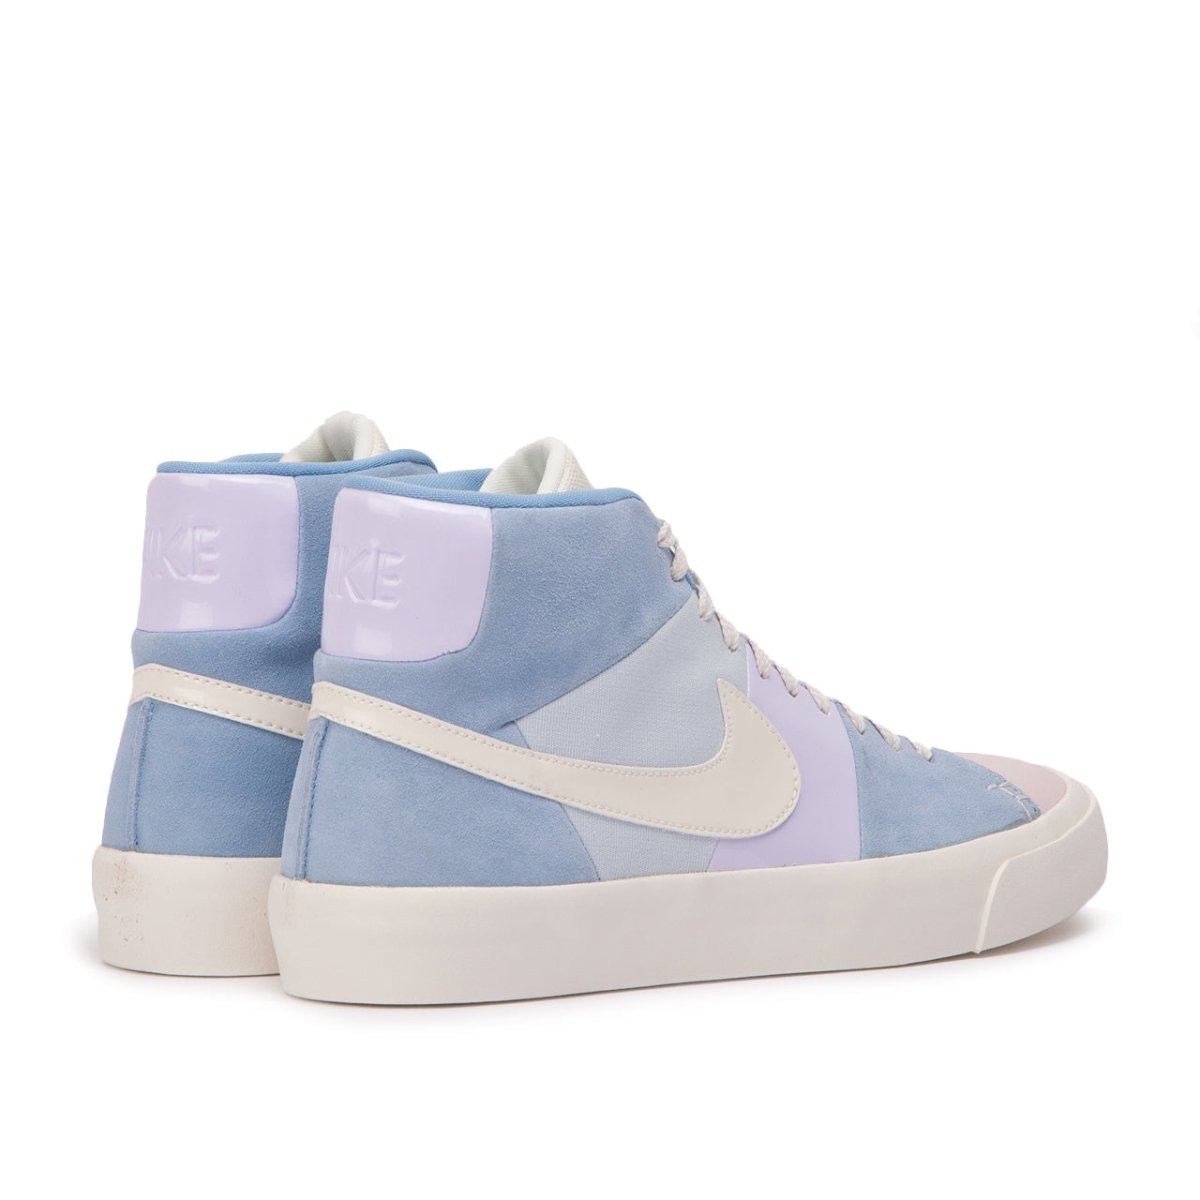 Nike Blazer Royal Easter QS (Pink / Sail / Hellblau)  - Allike Store